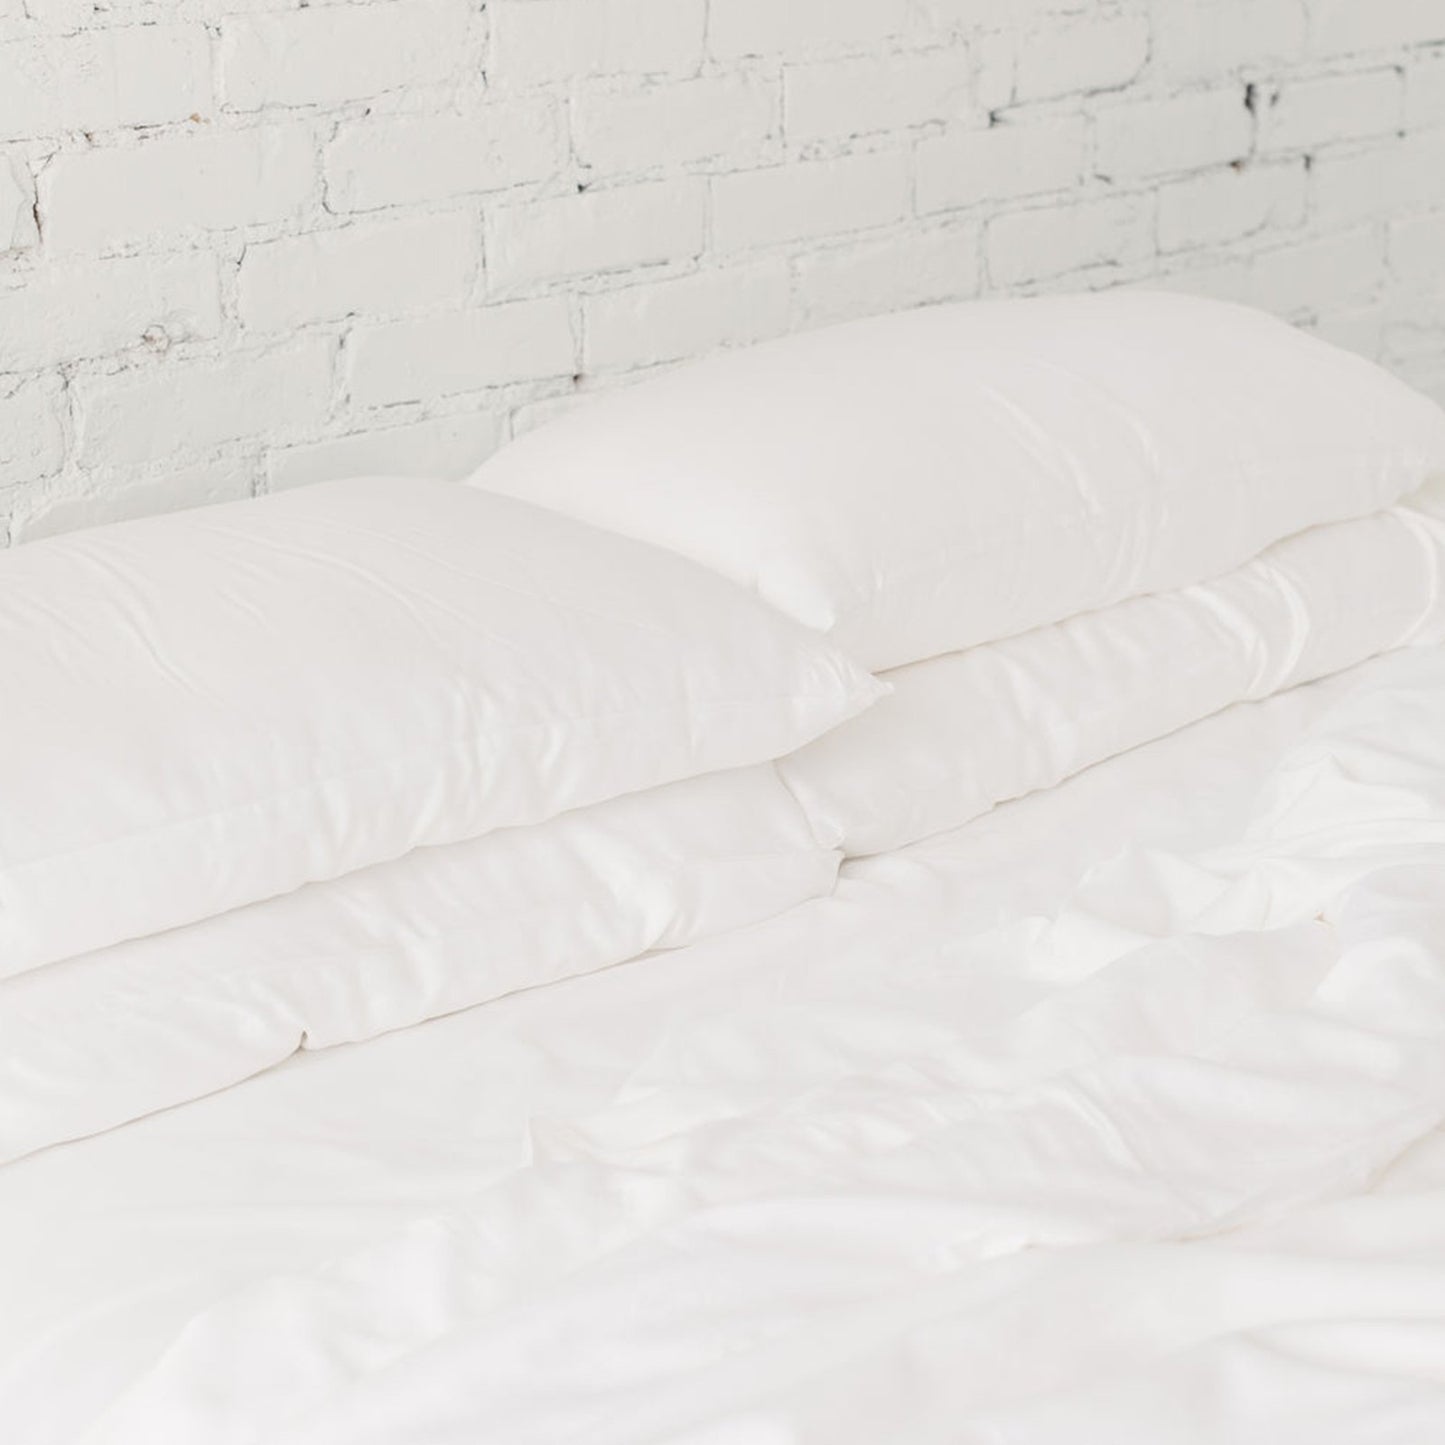 silk pillows on a bed